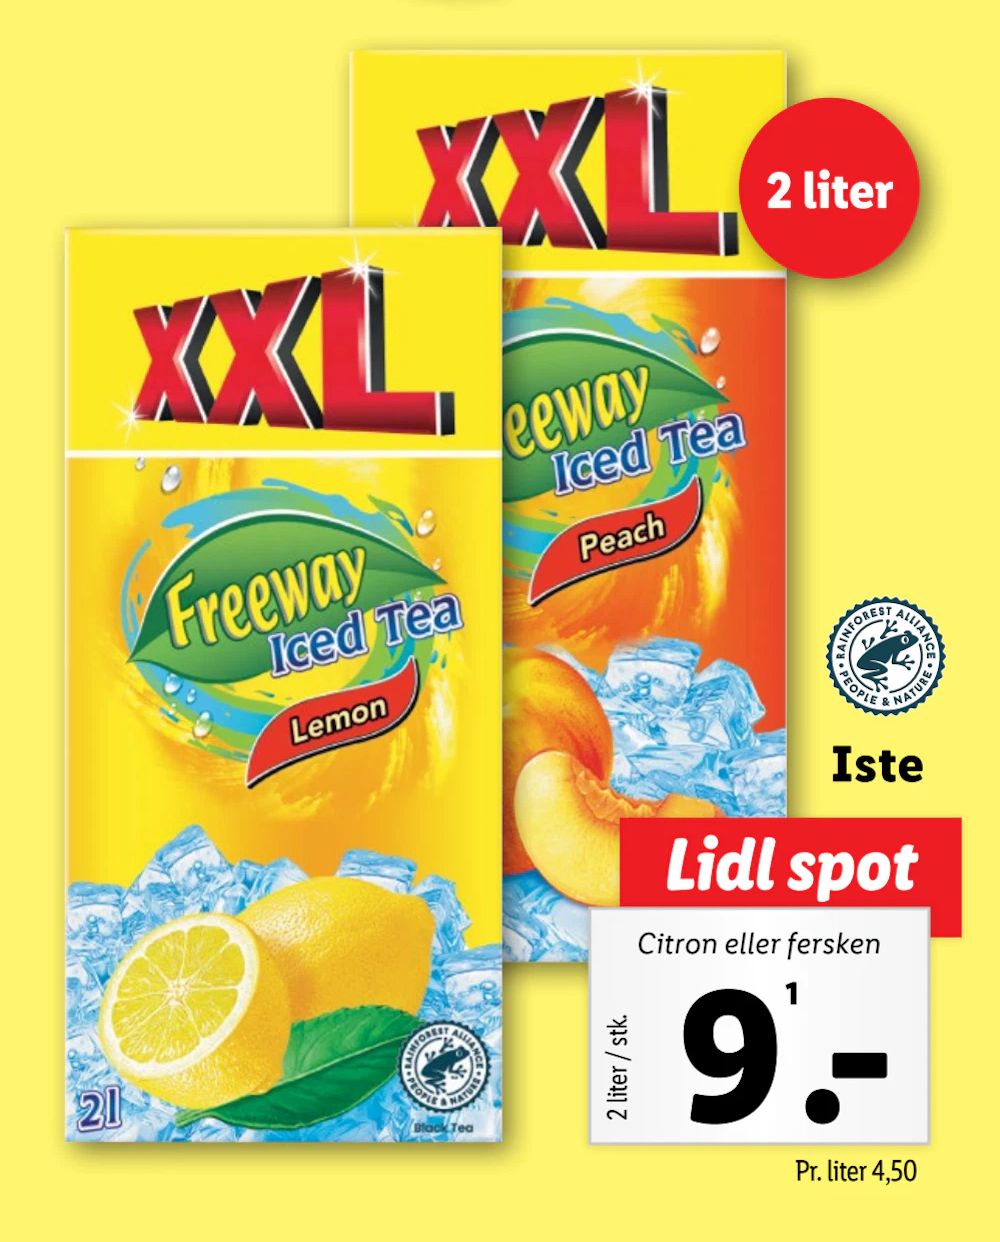 Tilbud på Citron eller fersken fra Lidl til 9 kr.